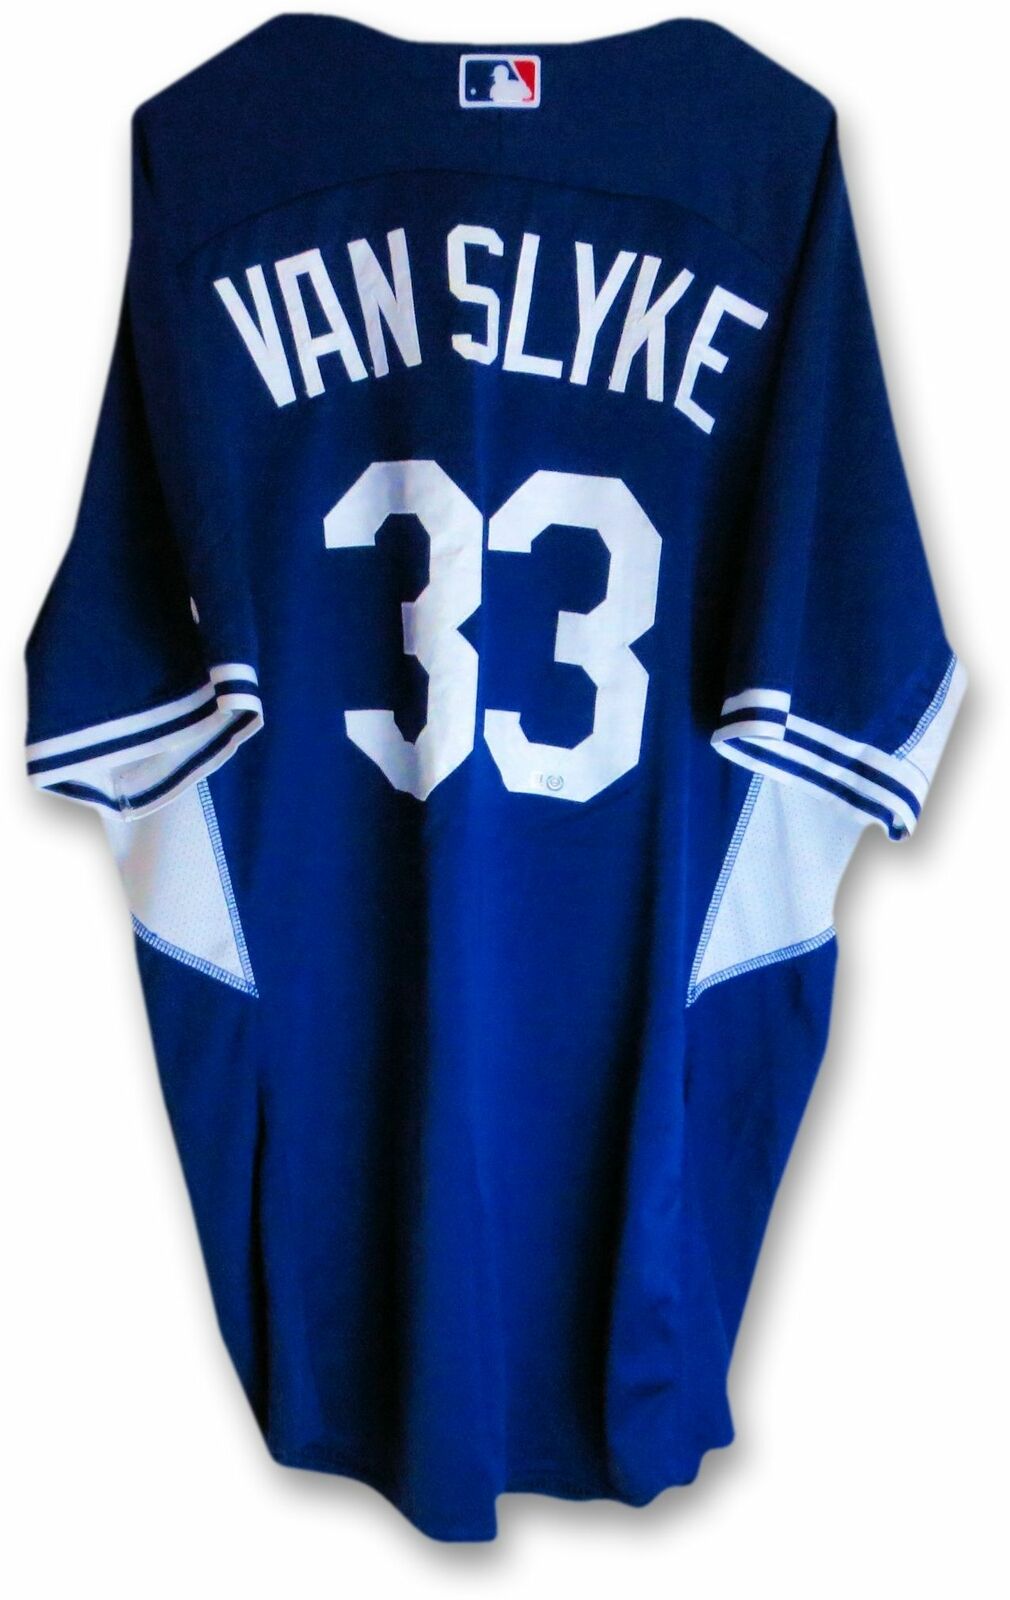 Scott Van Slyke Team Issue Batting Practice Jersey Dodgers #33 MLB JB085719